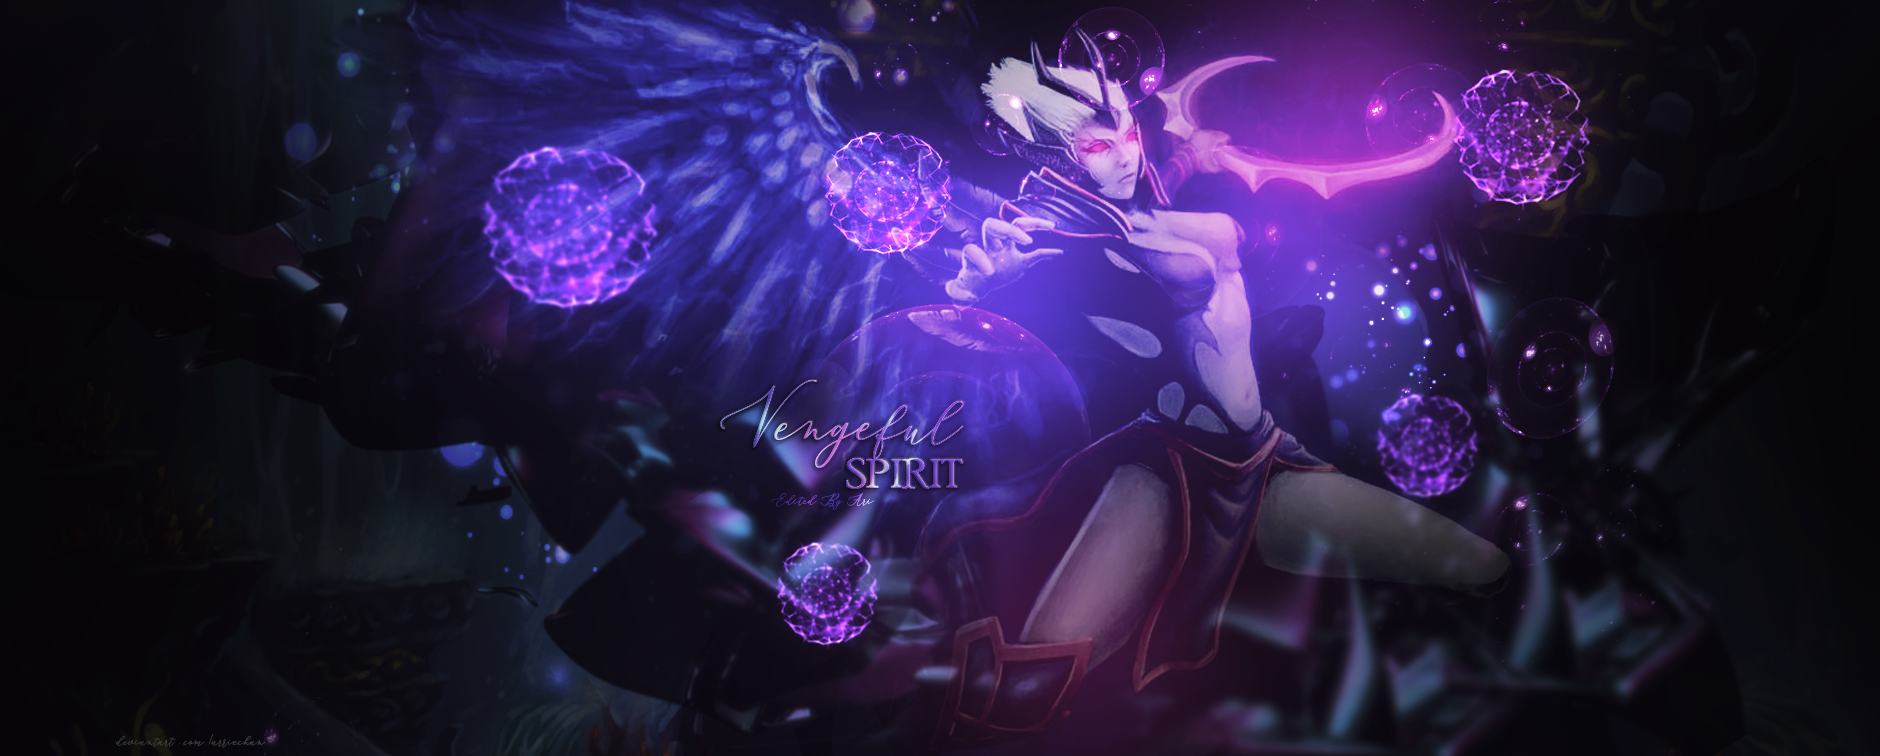 DotA 2 - Vengeful Spirit by Crusad3rMKII on DeviantArt